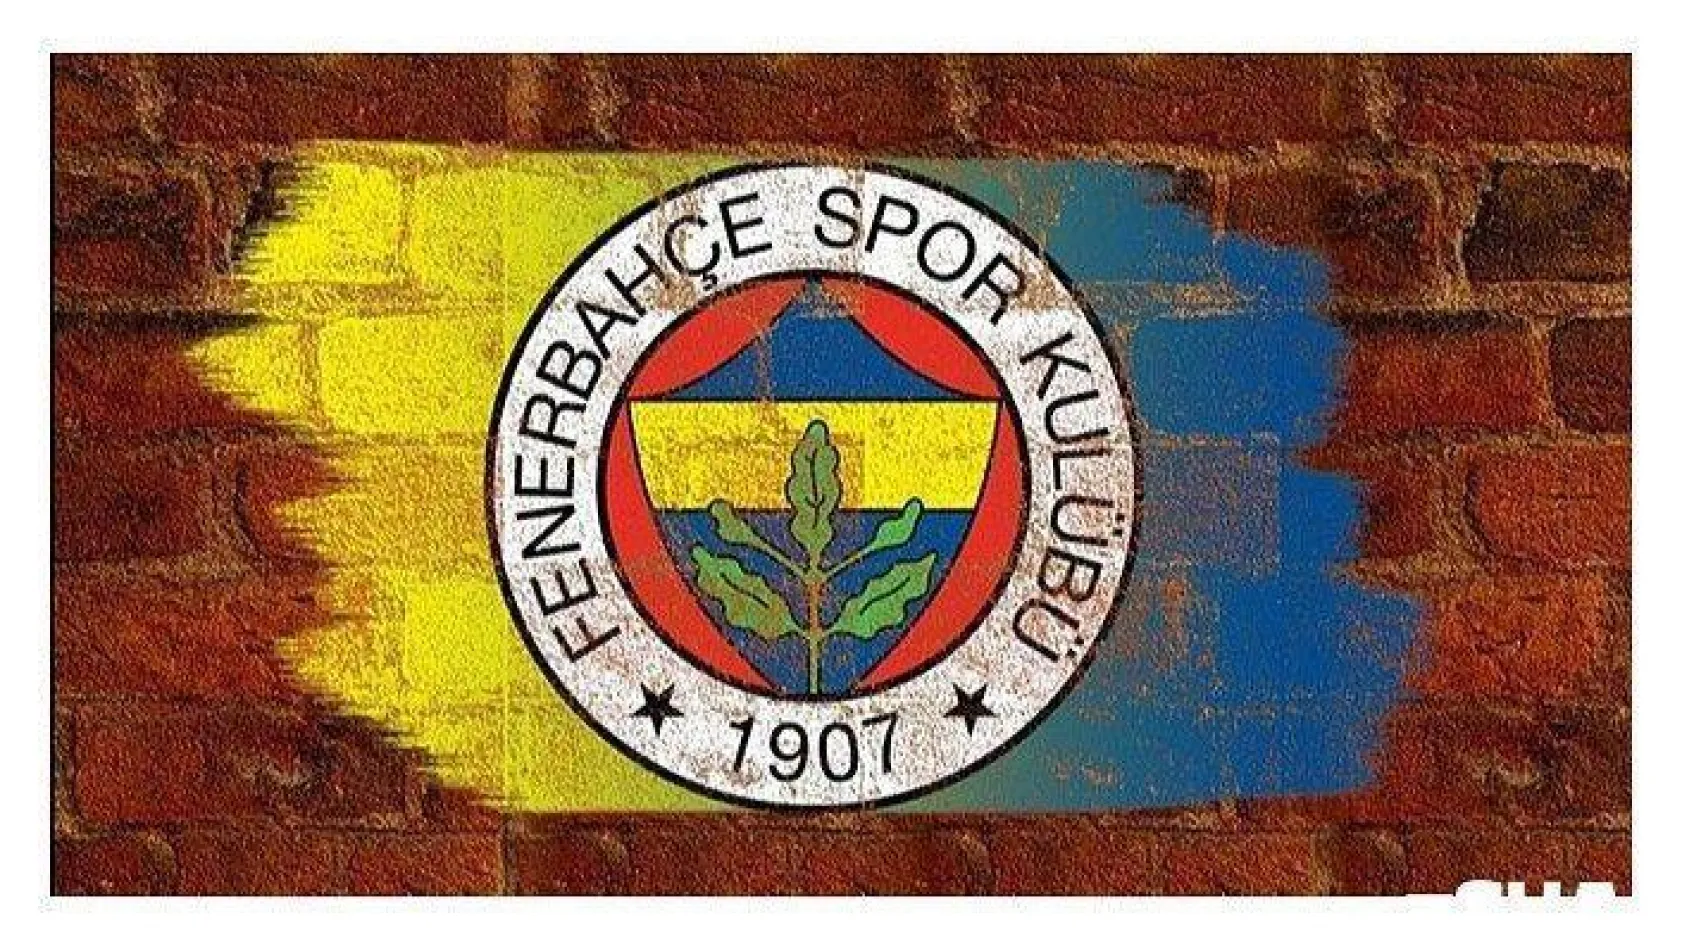 Fenerbahçe'de 2 pozitif vaka